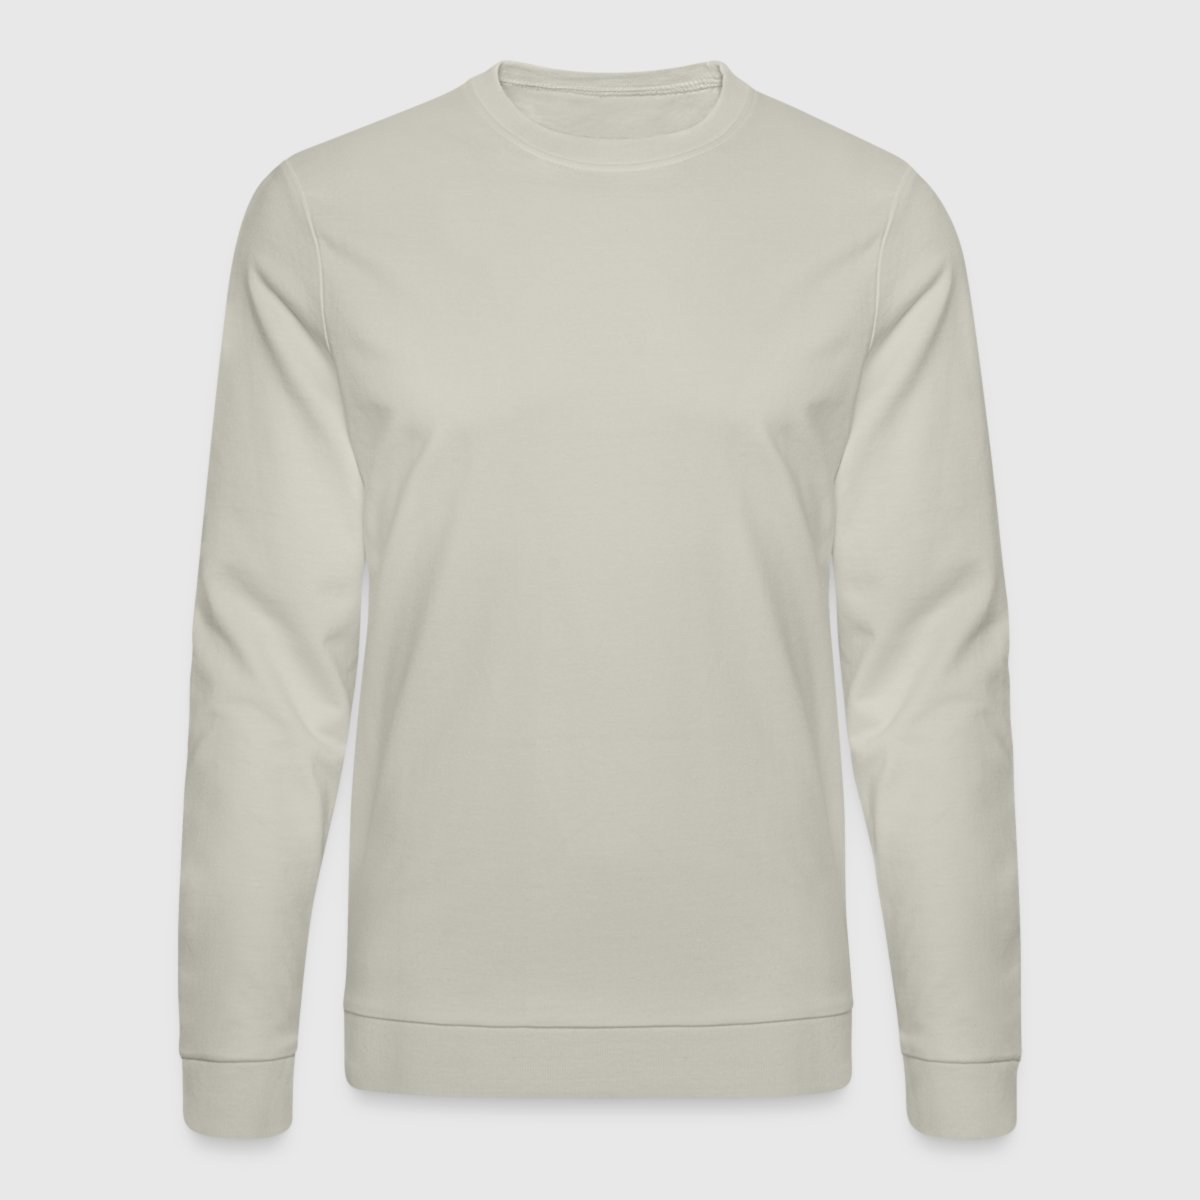 Unisex Sweater - Vorne